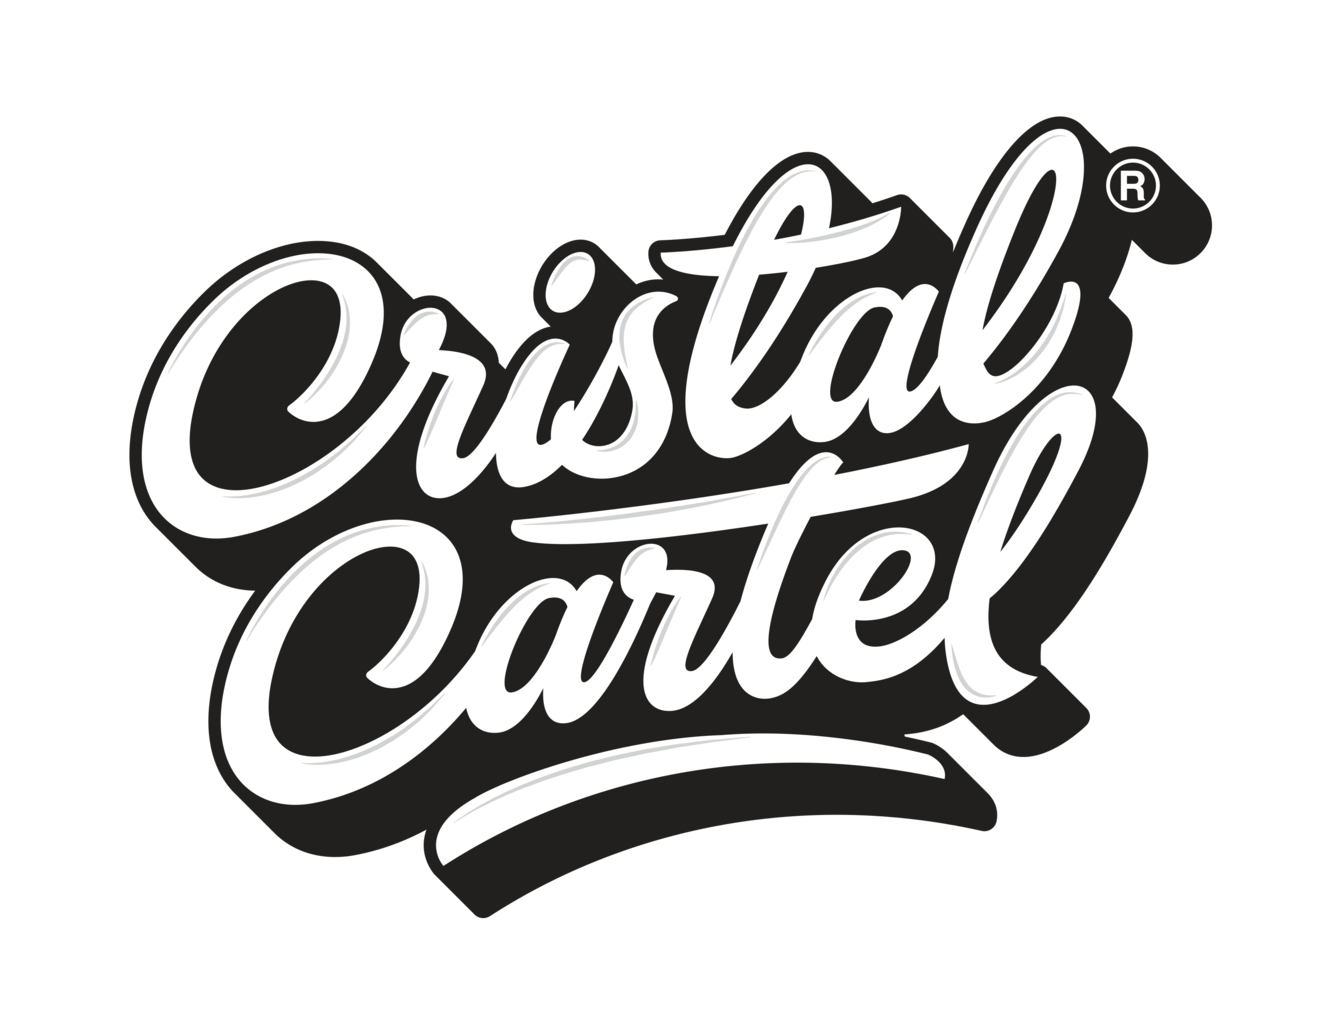 Cristal Cartel Clothing